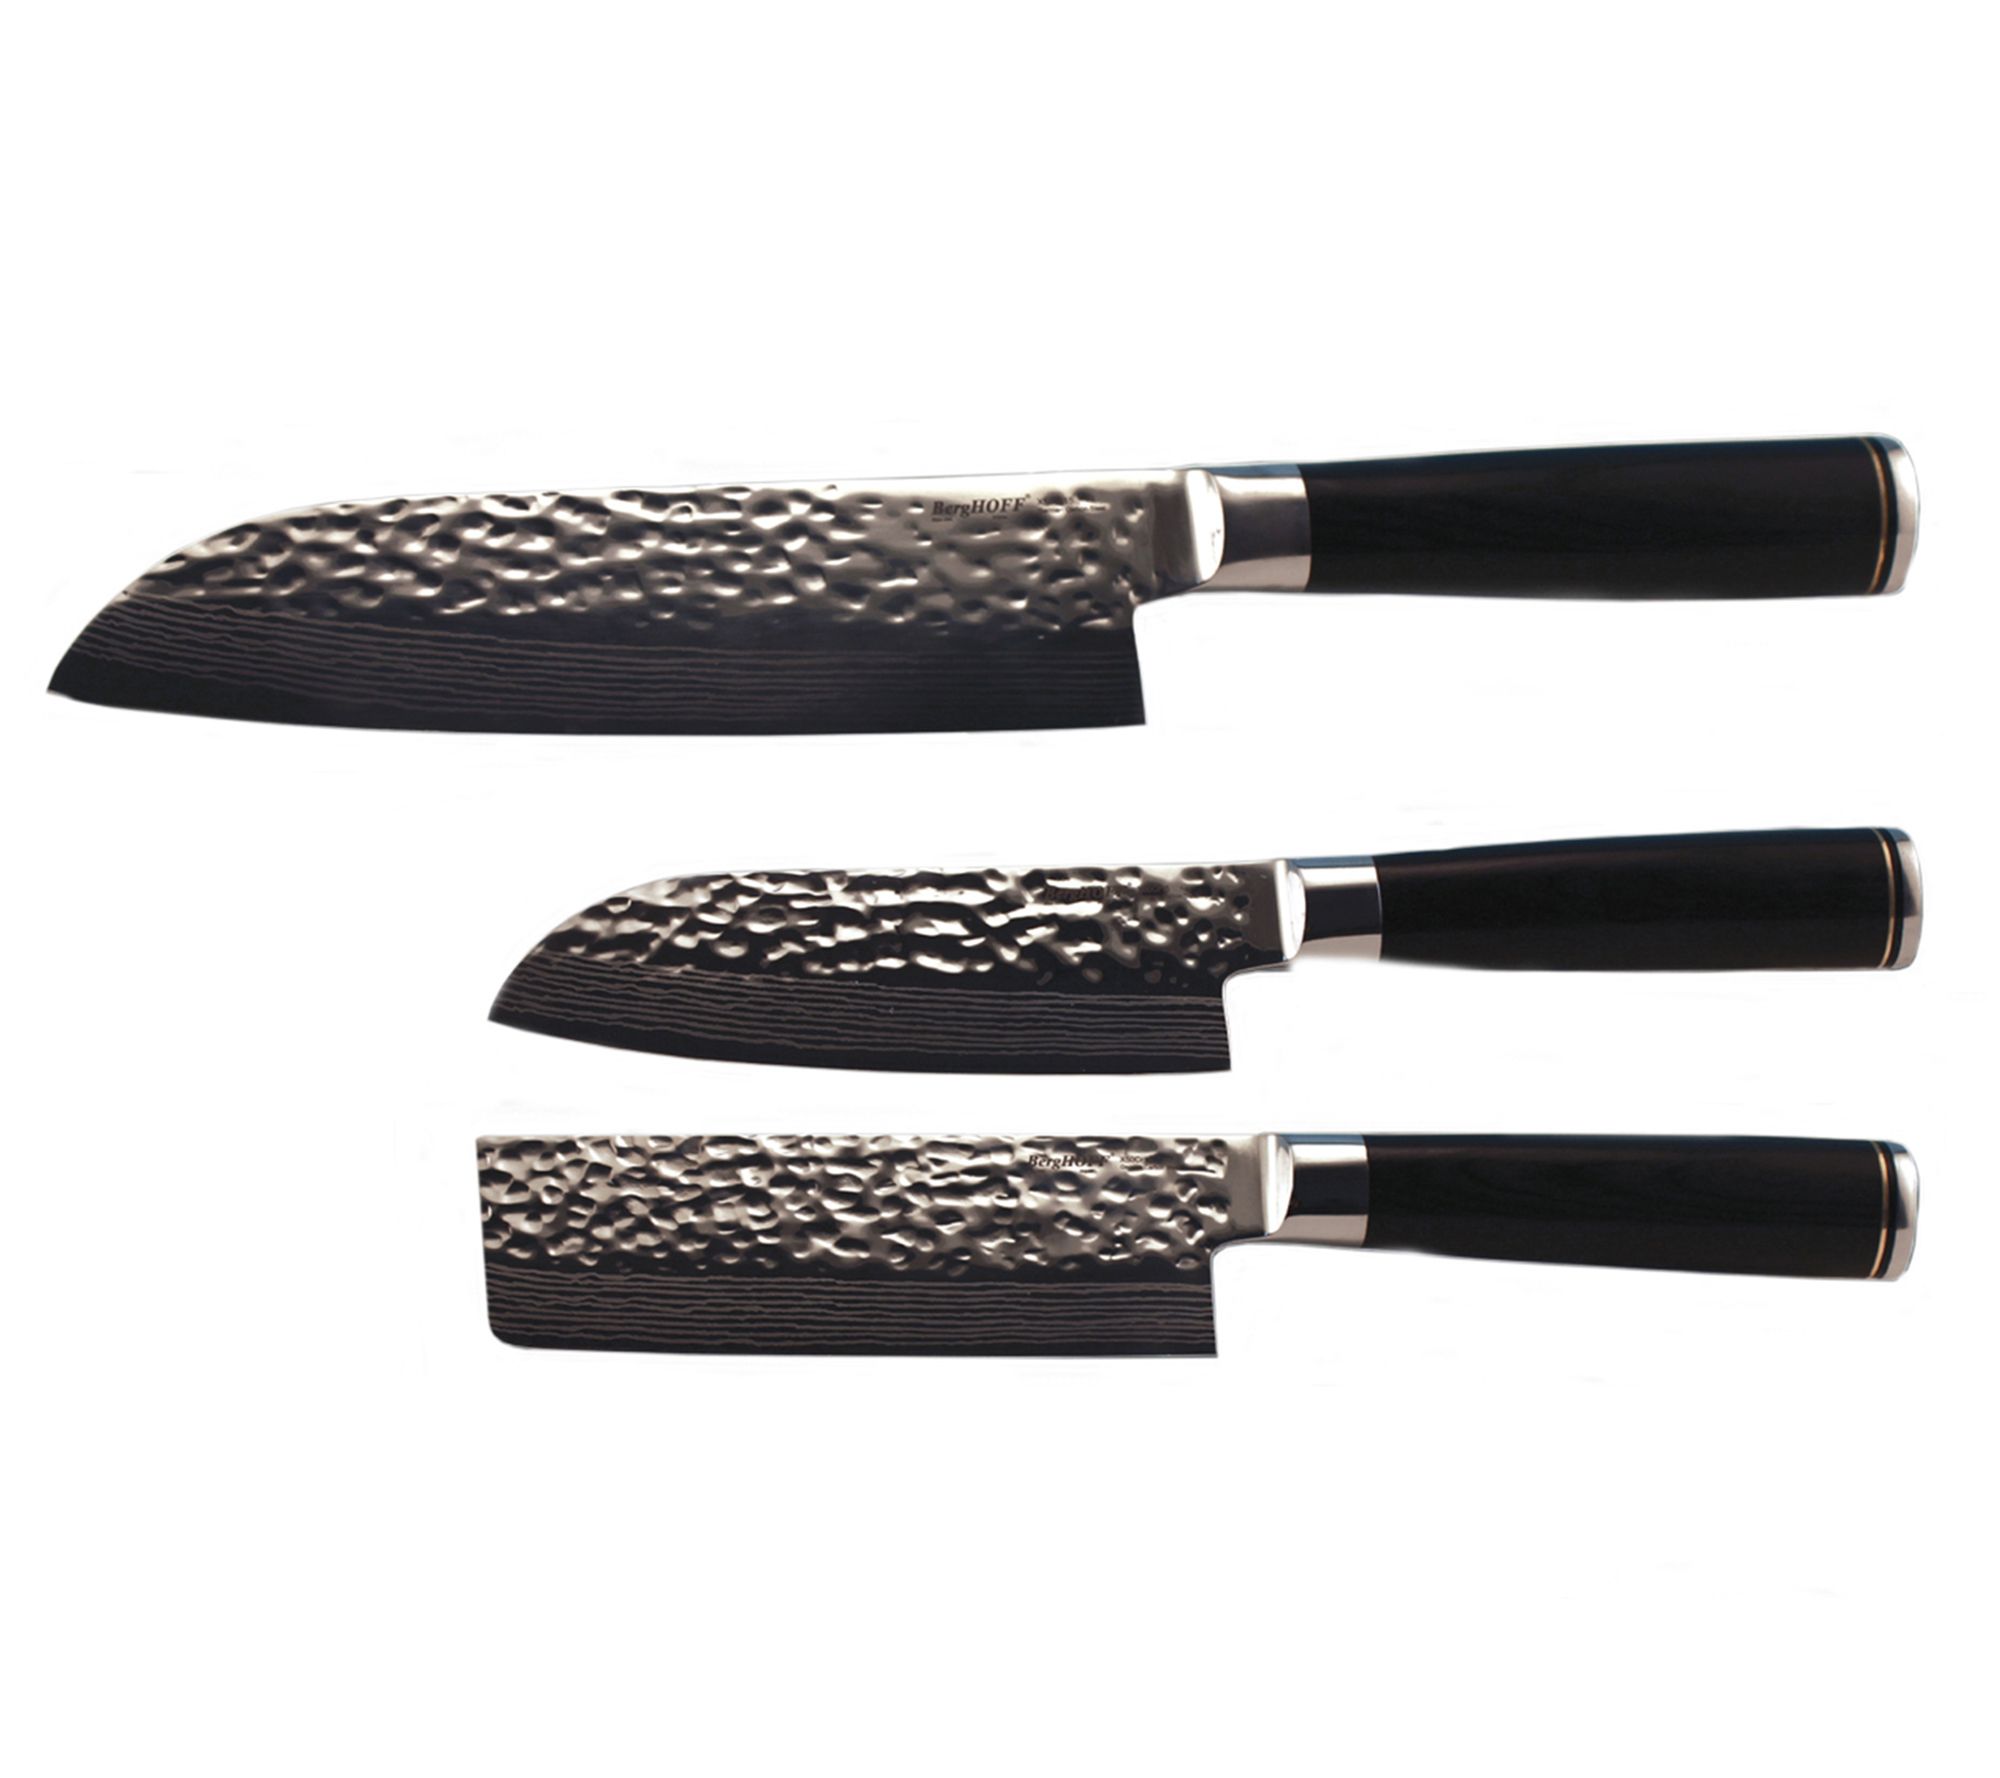 Starfrit Set of Ceramic Knives - Knife Set - 1 x Paring Knife, 1 x Utility  Knife, 1 x Chef's Knife - Cutting, Paring - Dishwasher Safe